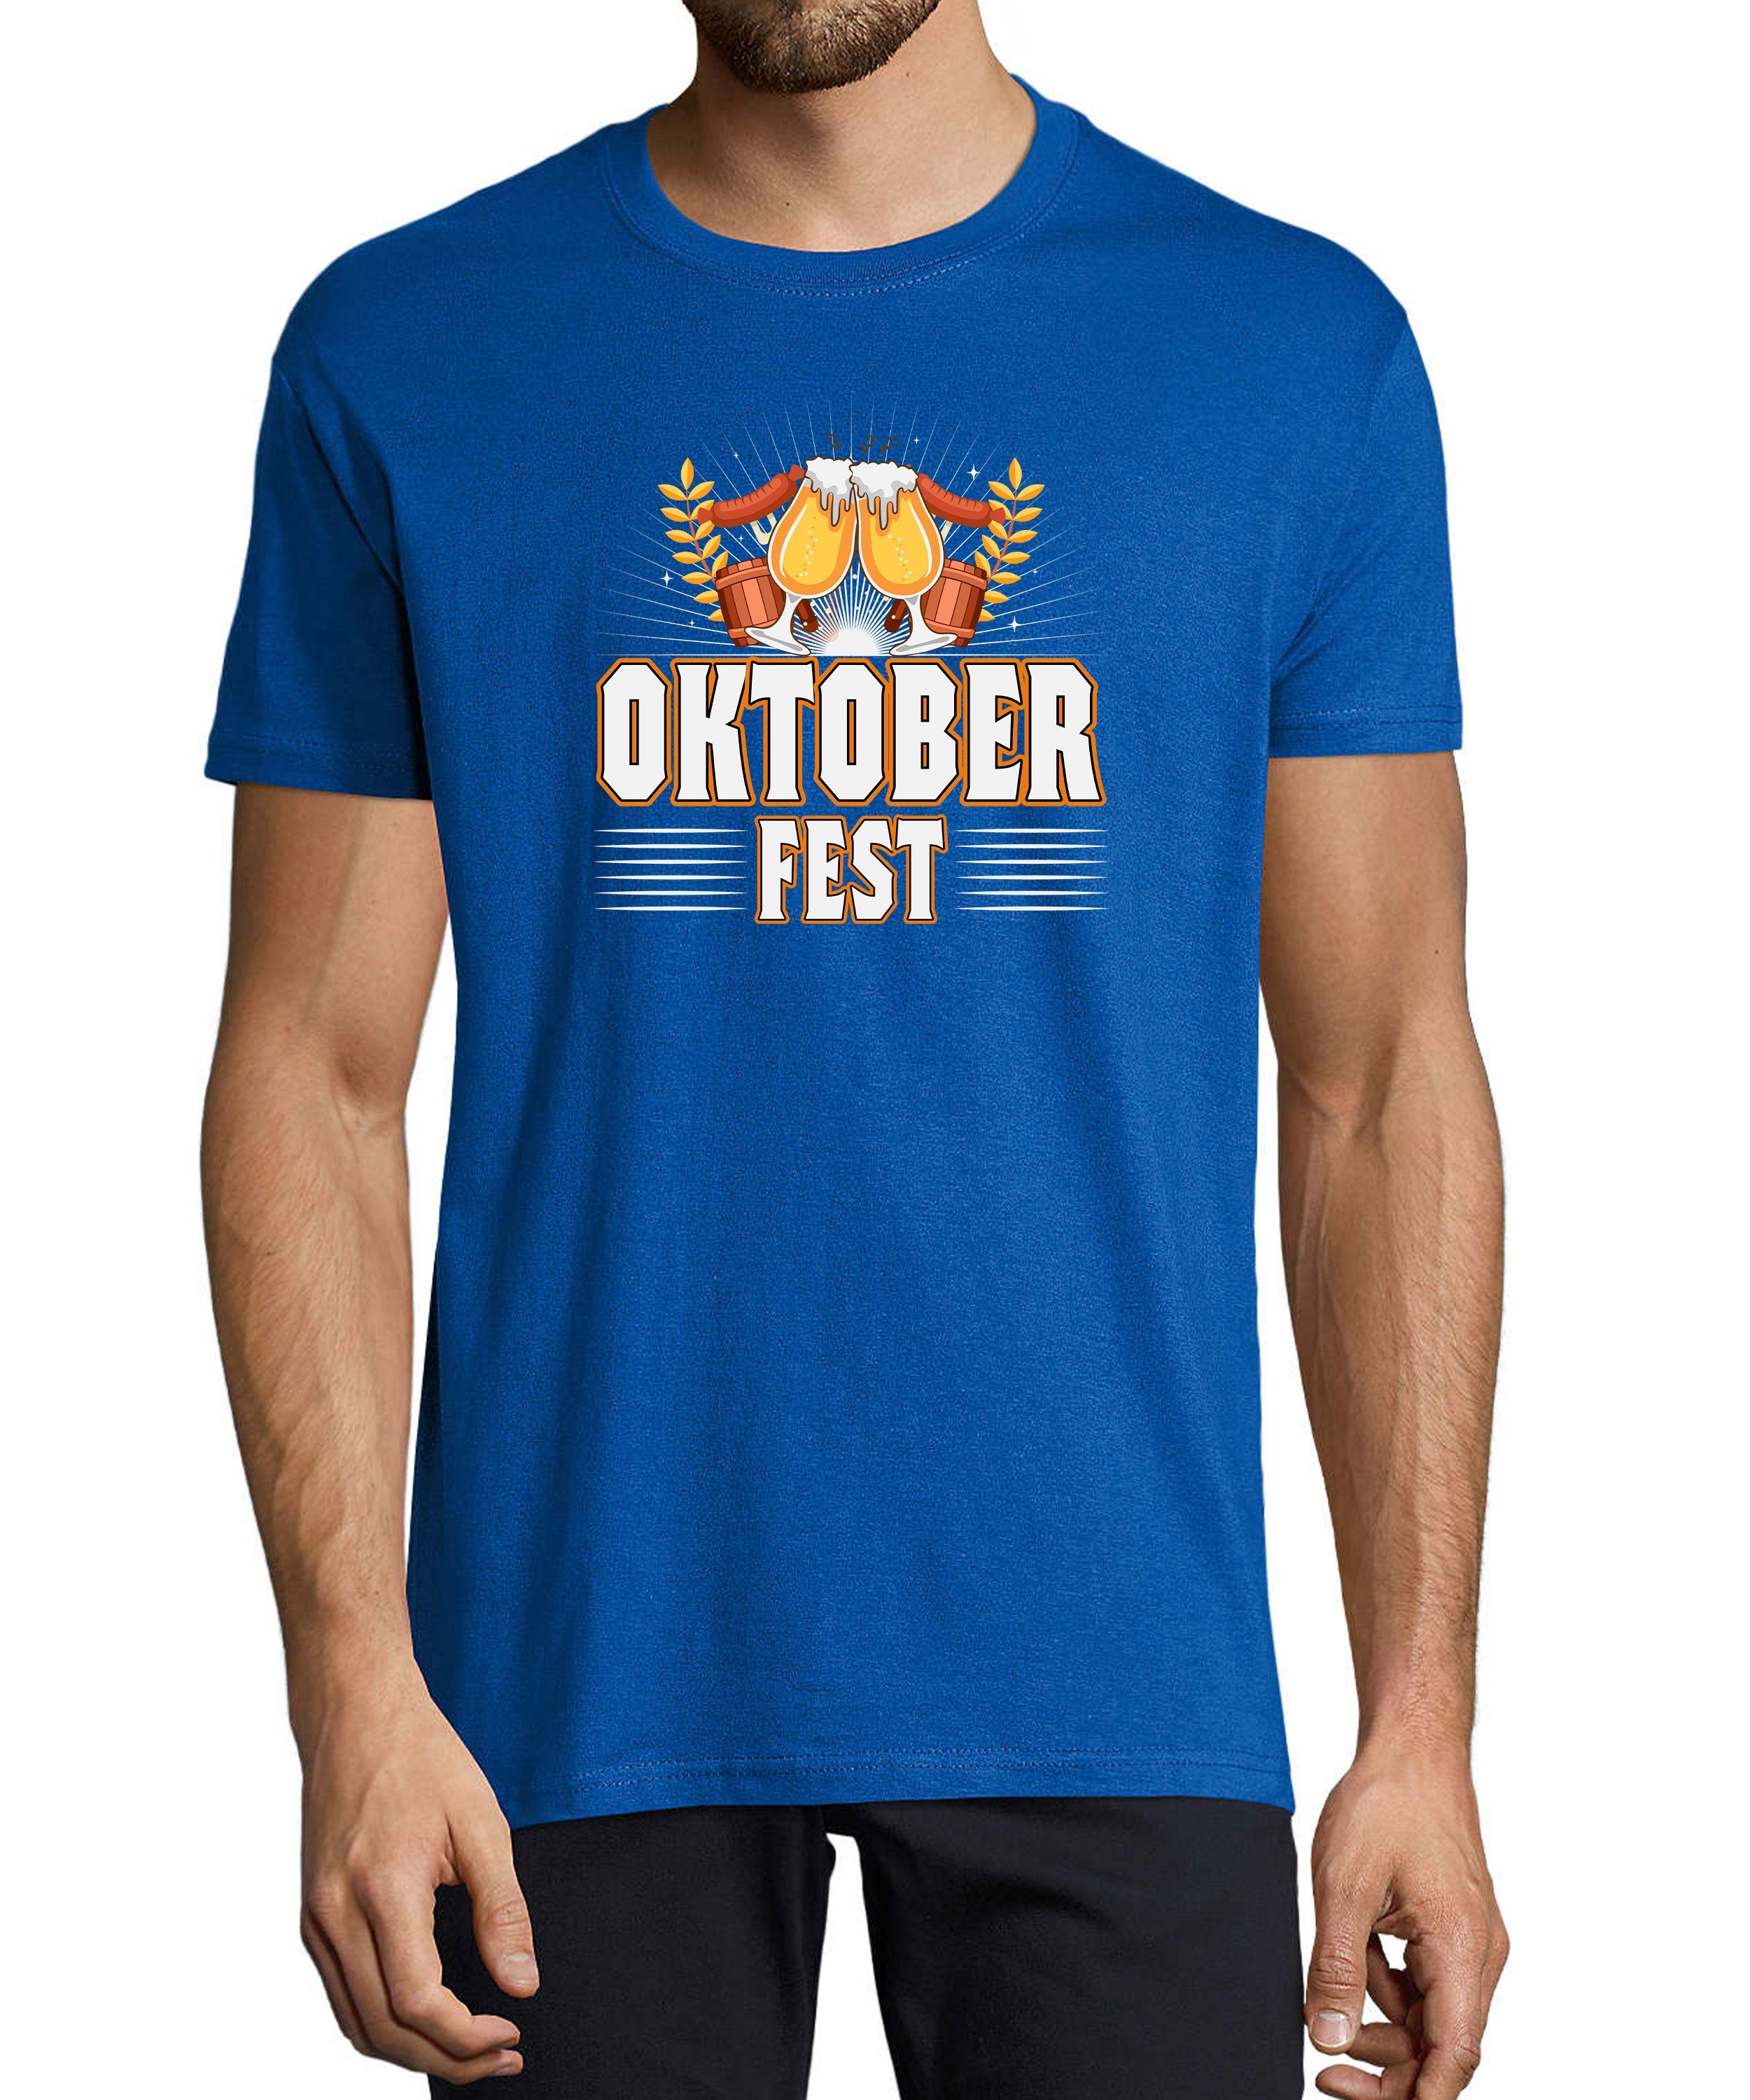 Herren blau royal MyDesign24 T-Shirt mit i327 Regular Party Shirt Baumwollshirt Aufdruck Fit, Oktoberfest - T-Shirt